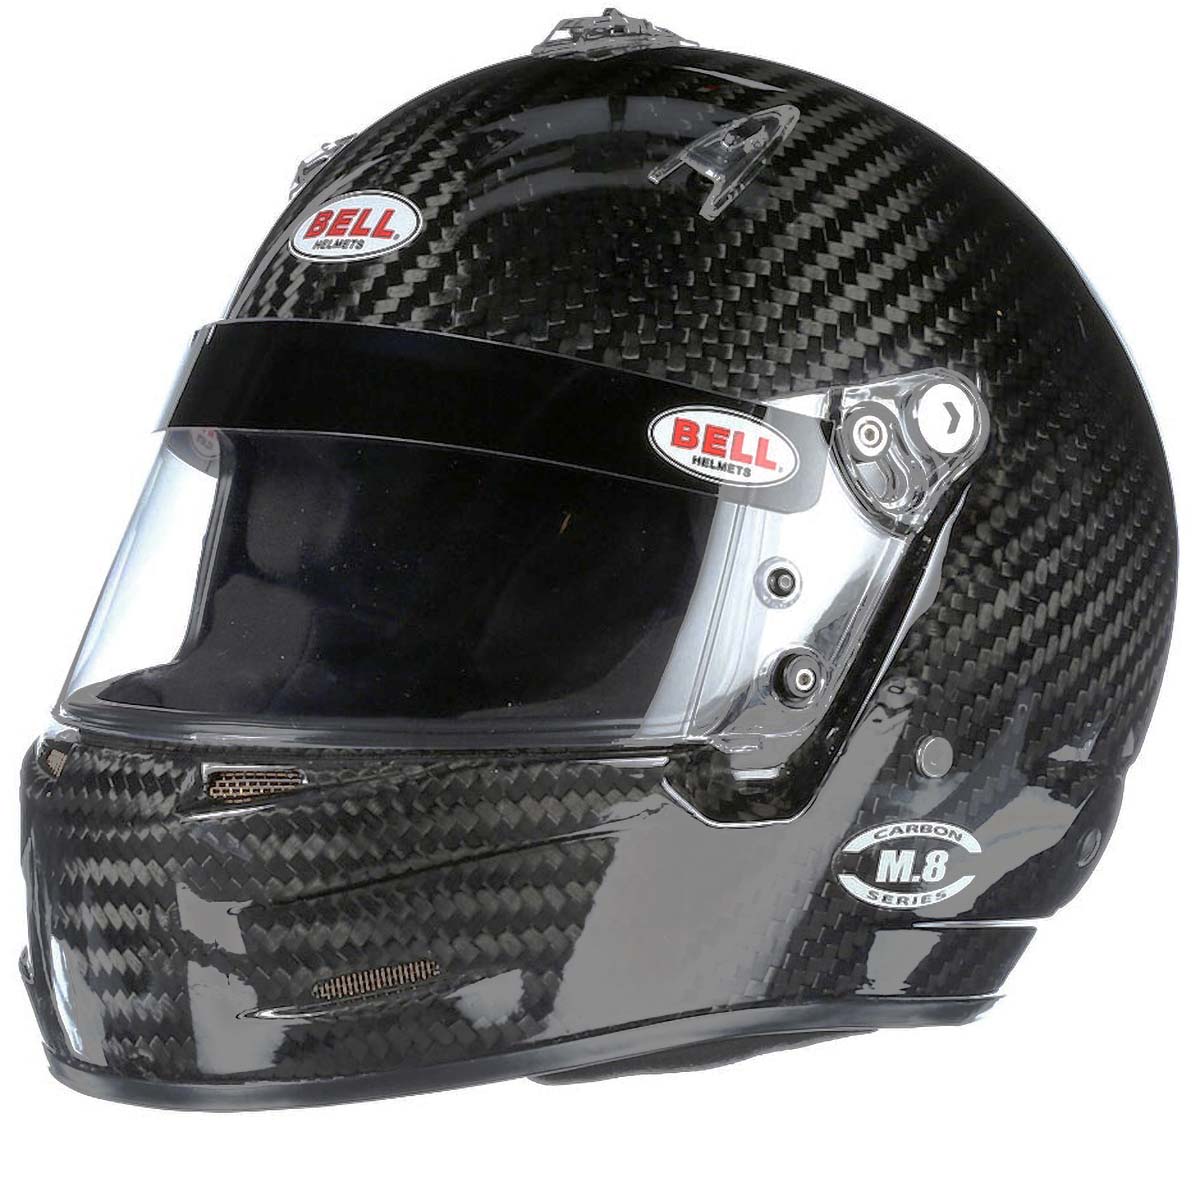 Bell M.8 Carbon Fiber Helmet SA2020 Front View Image